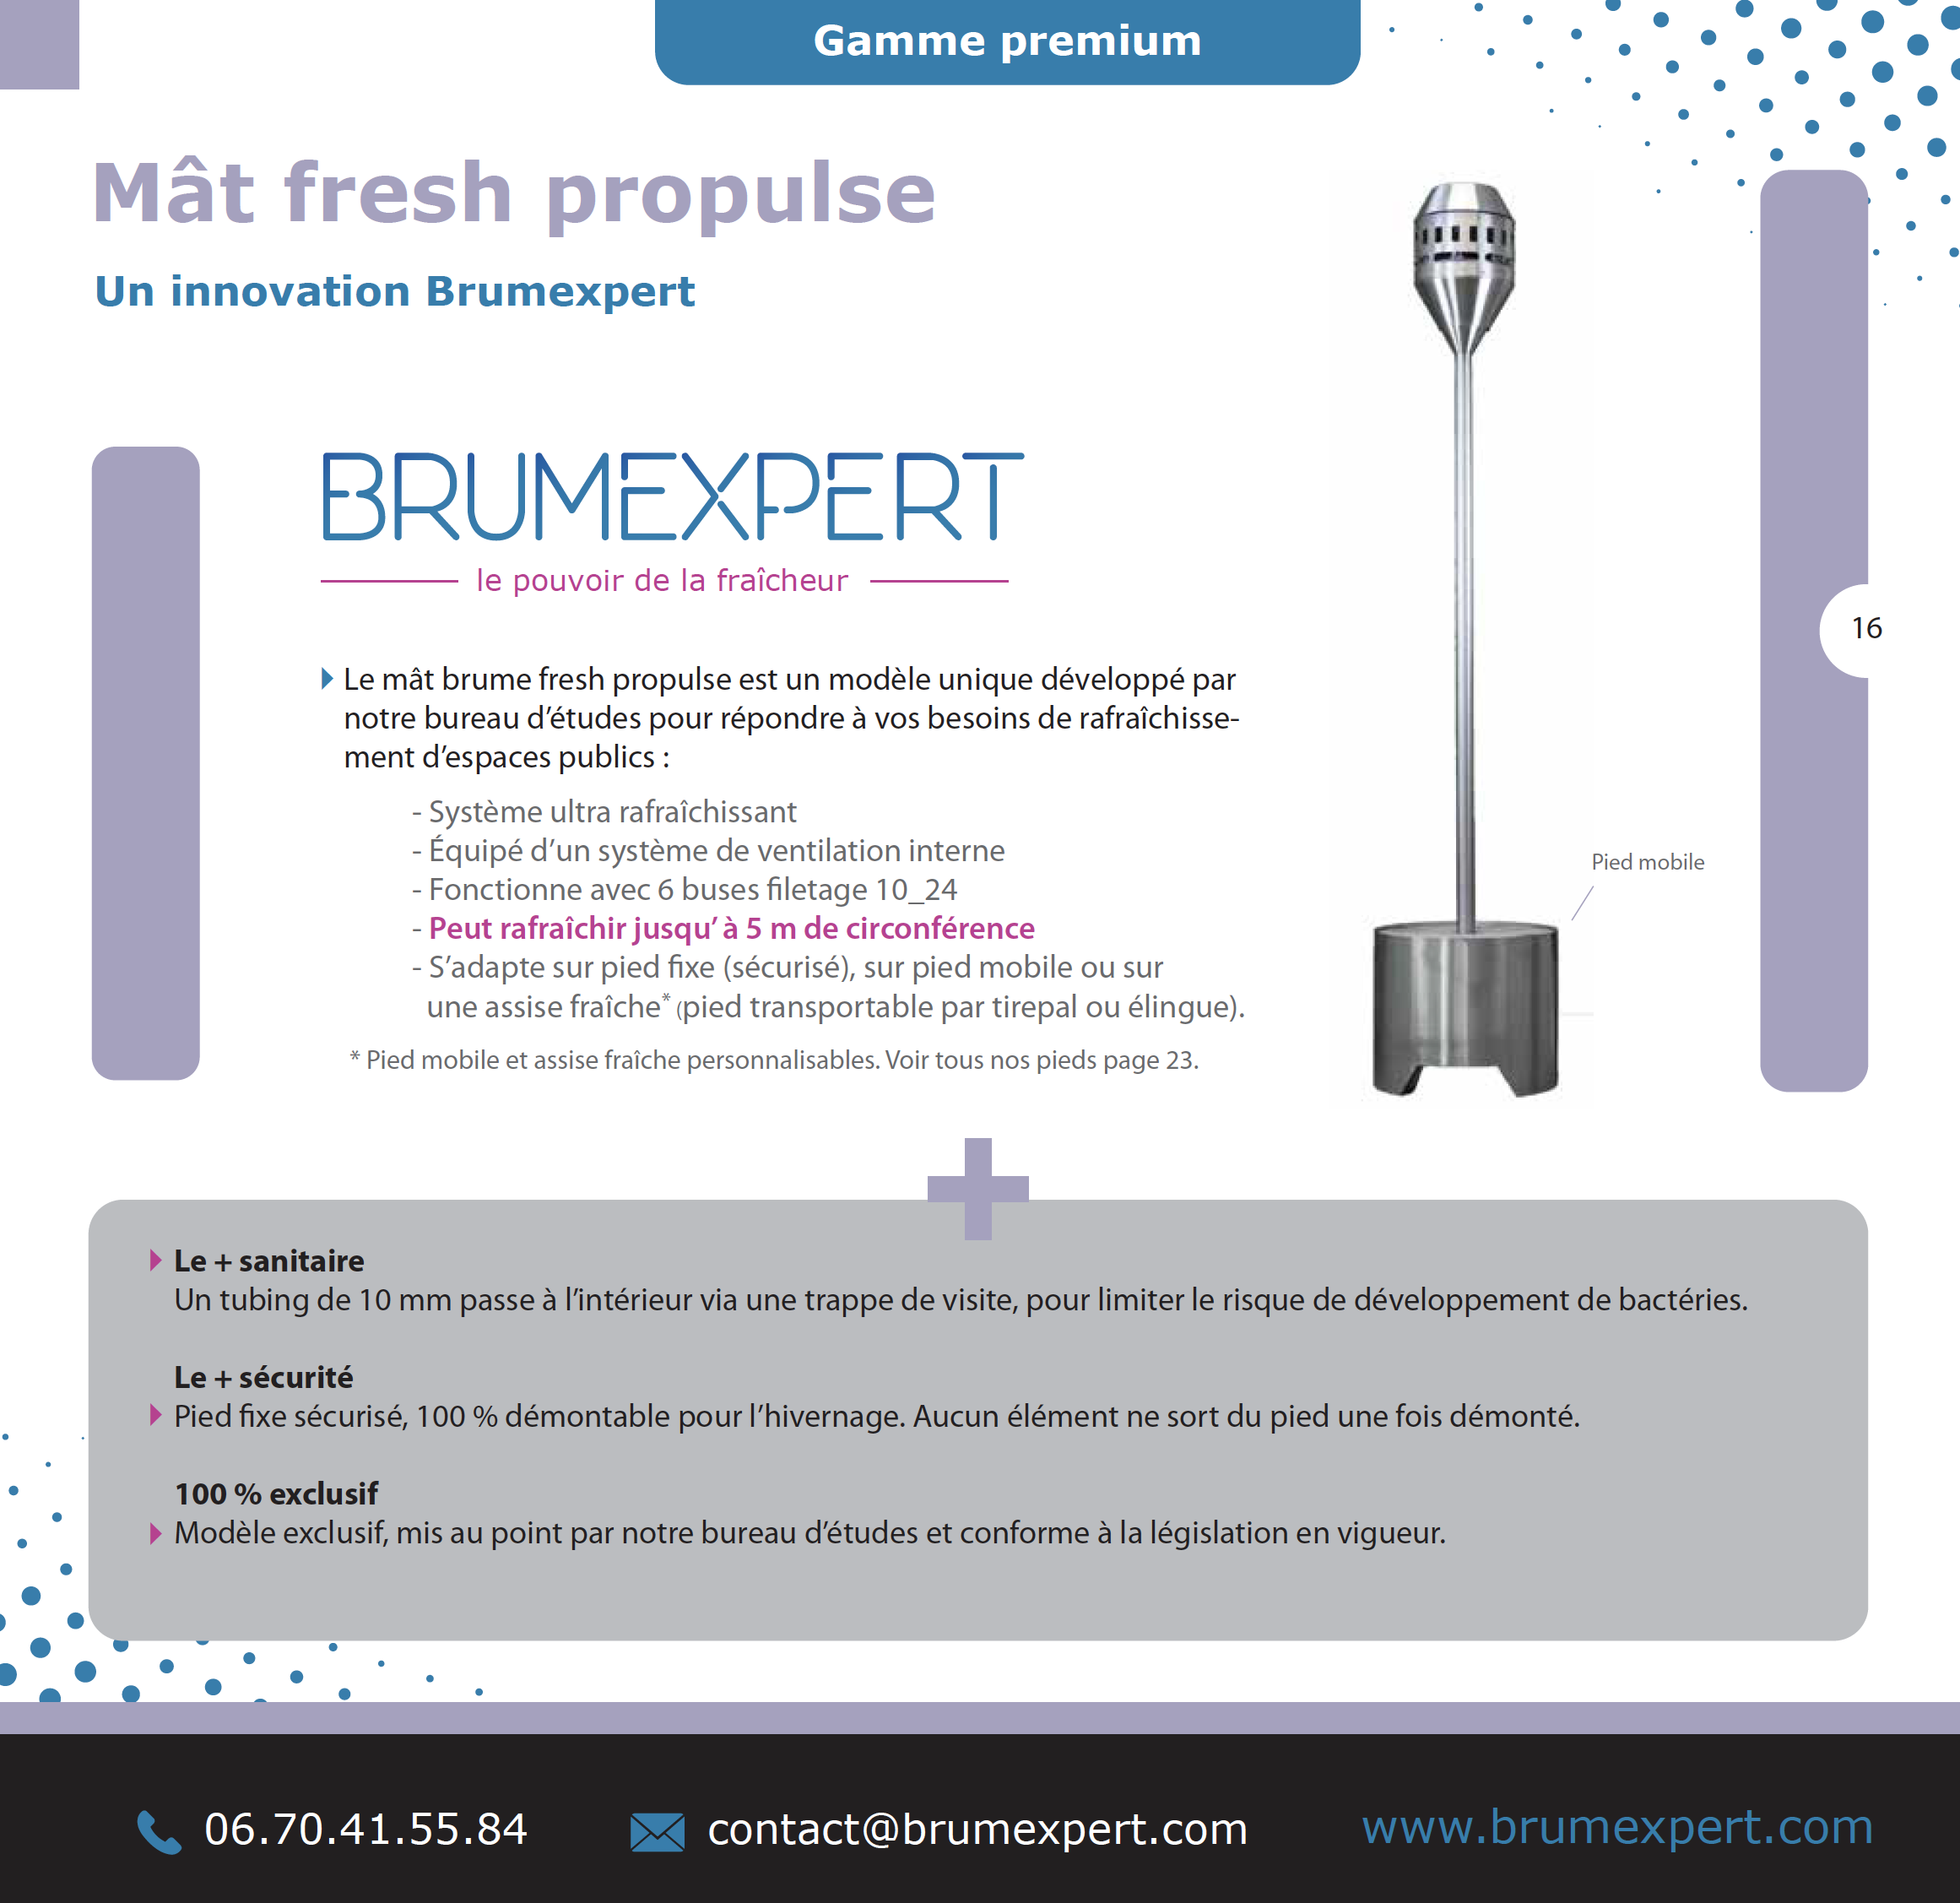 Mat fresh propulse brumexpert